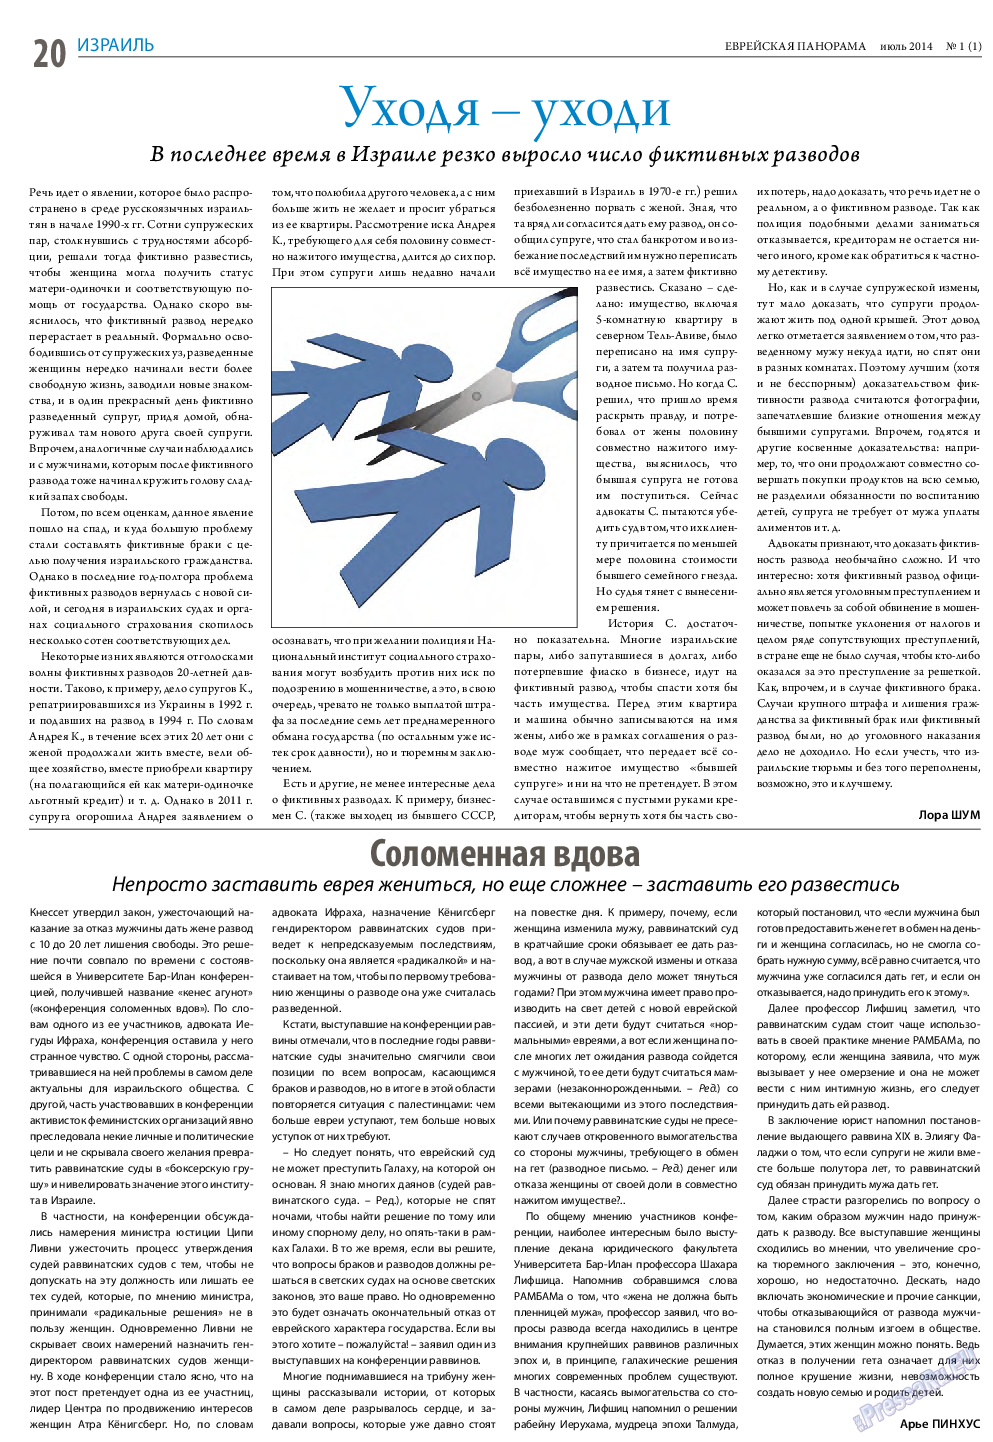 Еврейская панорама, газета. 2014 №1 стр.20